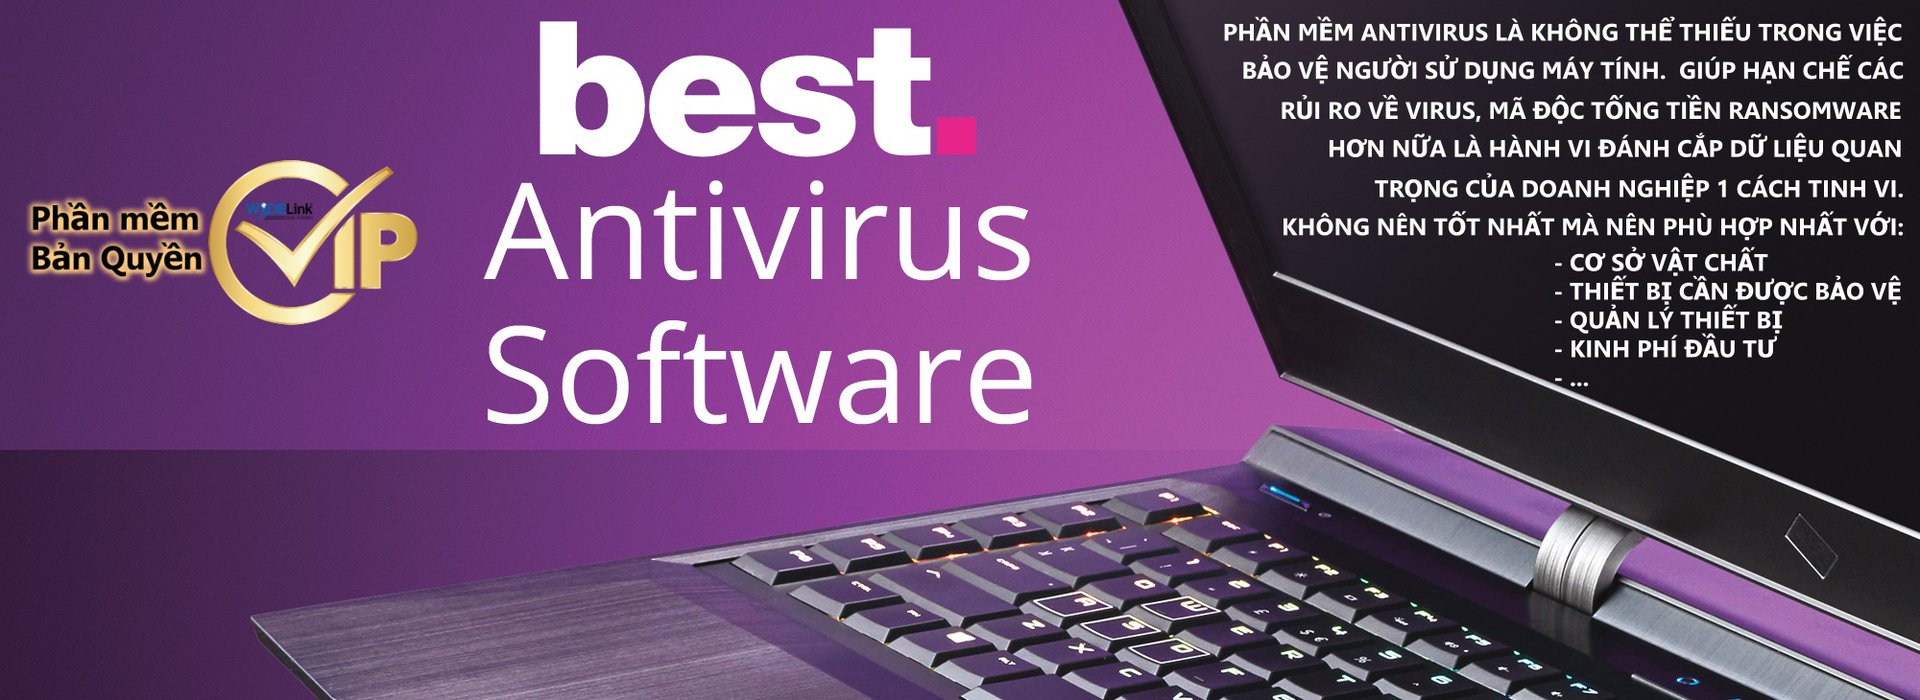 Phần mềm Antivirus tốt nhất 2021